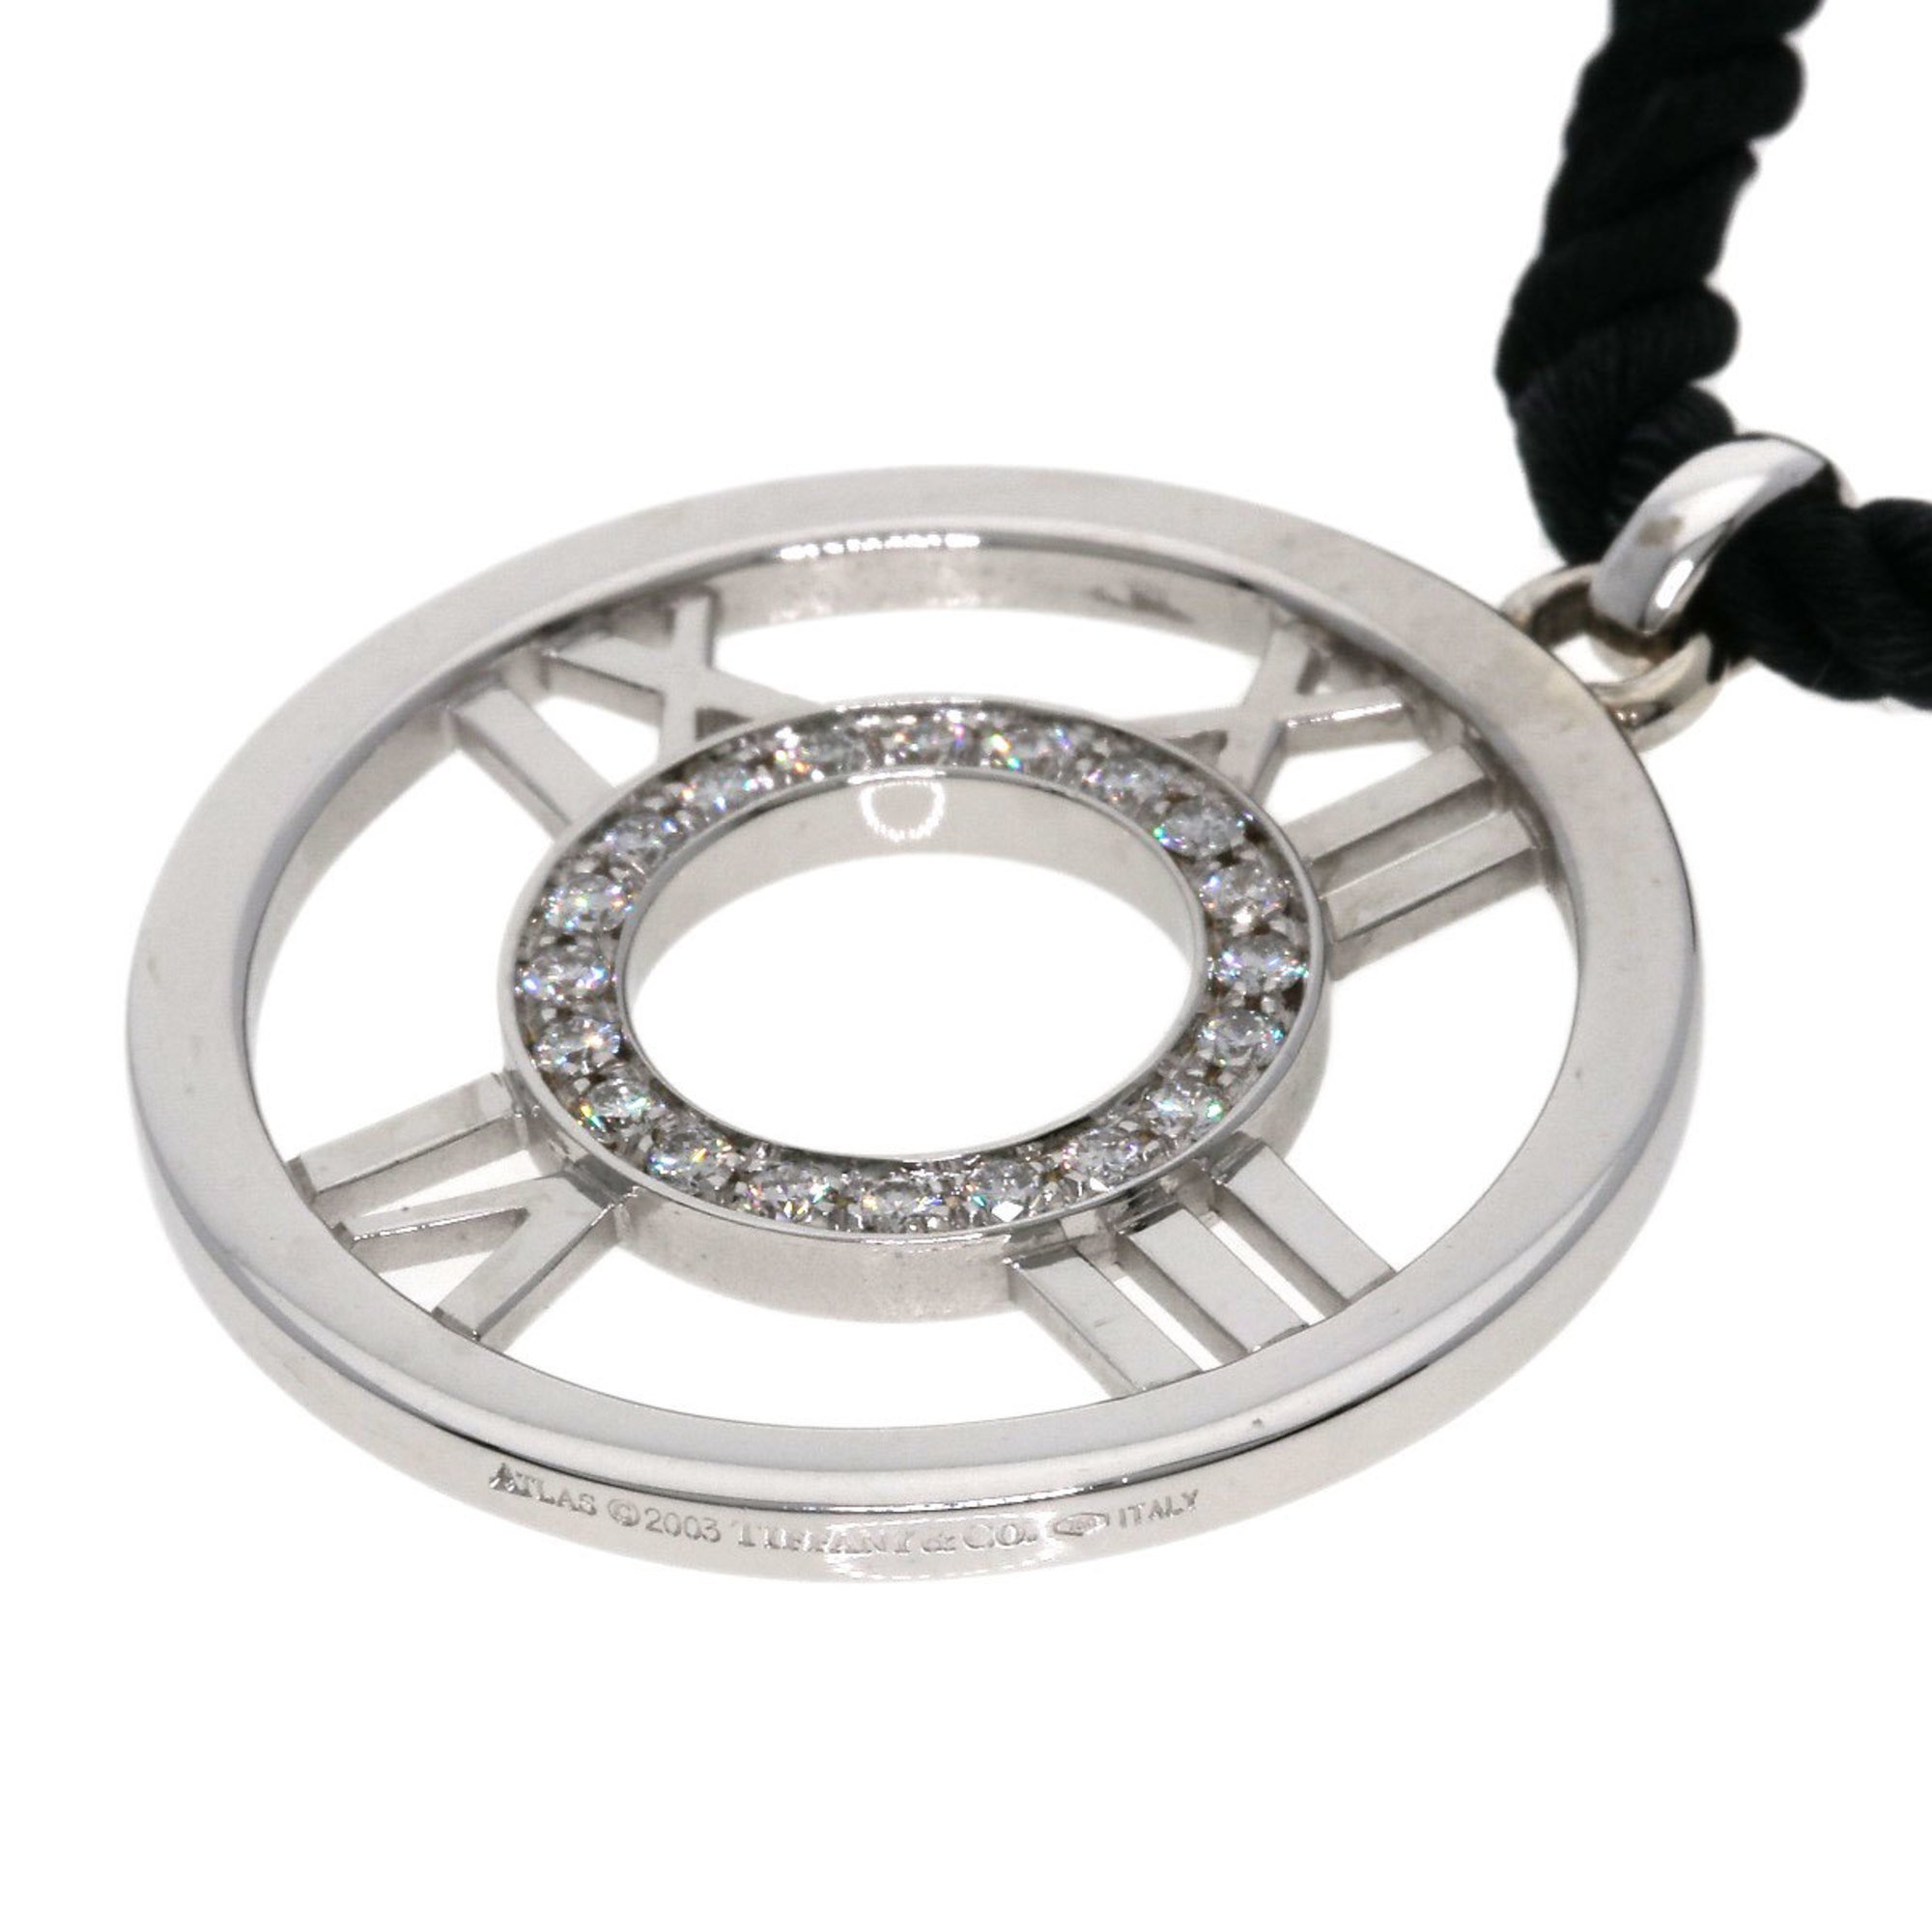 Tiffany Atlas Medallion Diamond Necklace, 18K White Gold, Women's